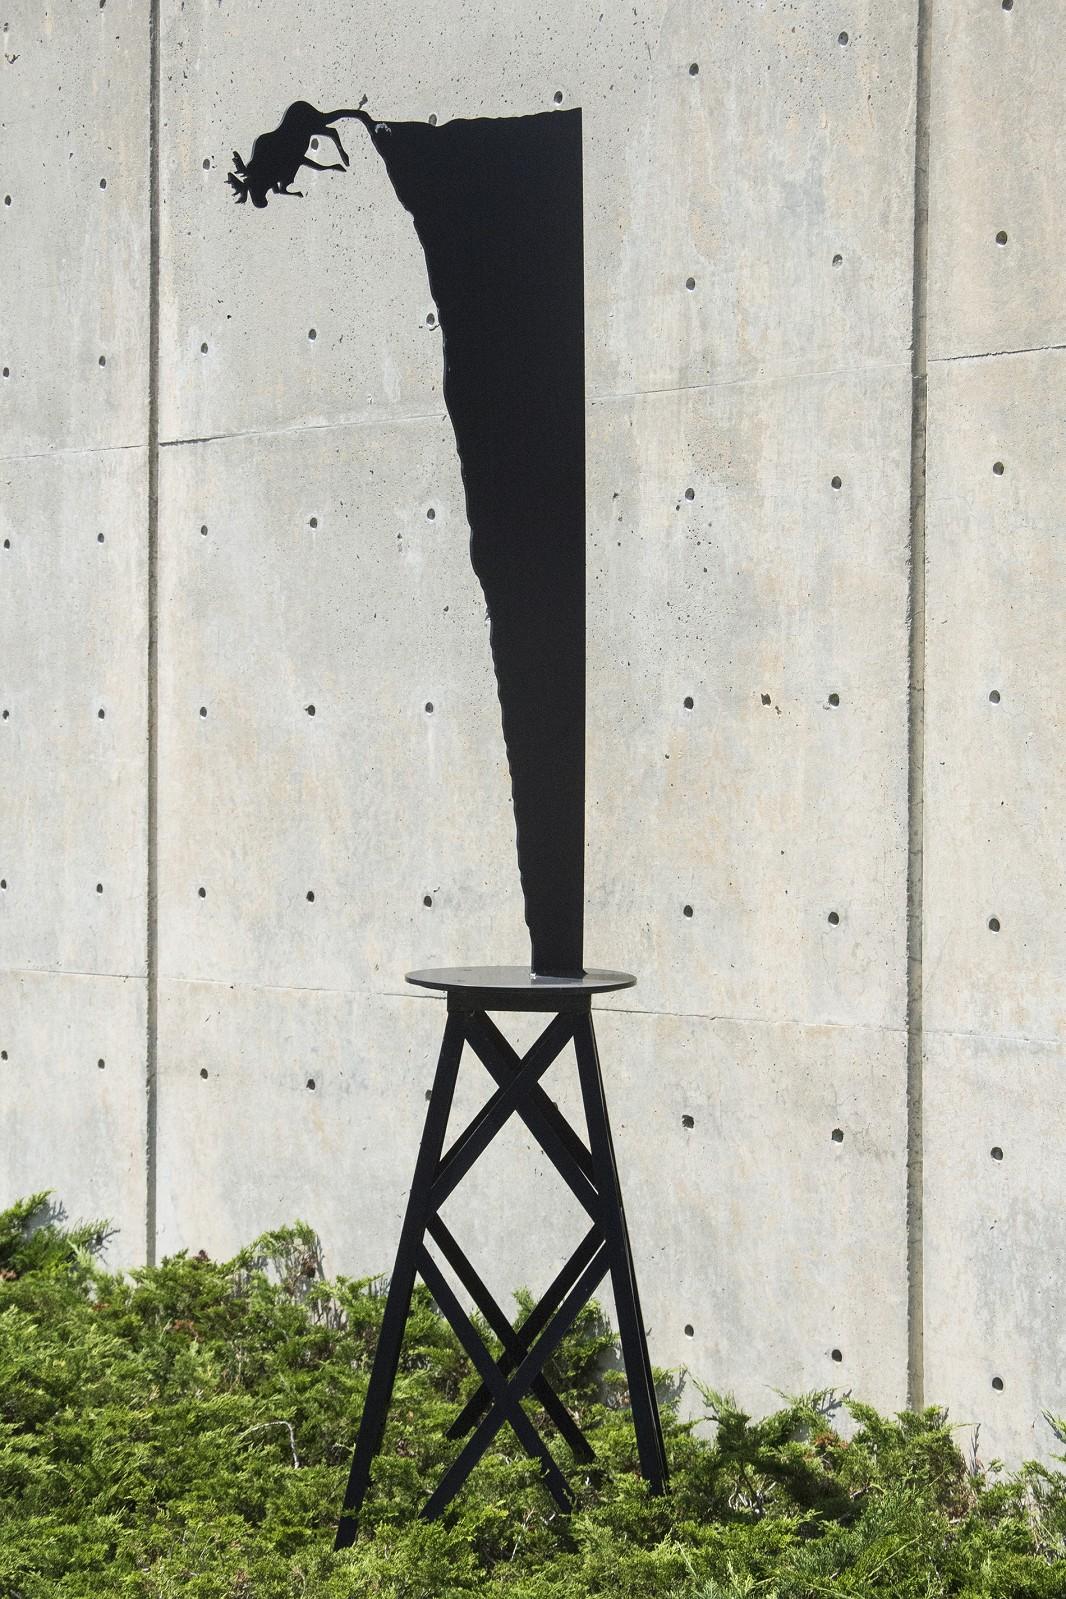 Moose Plunge (large) - tall, playful, pop art, Canadian, aluminum sculpture - Sculpture by Charles Pachter